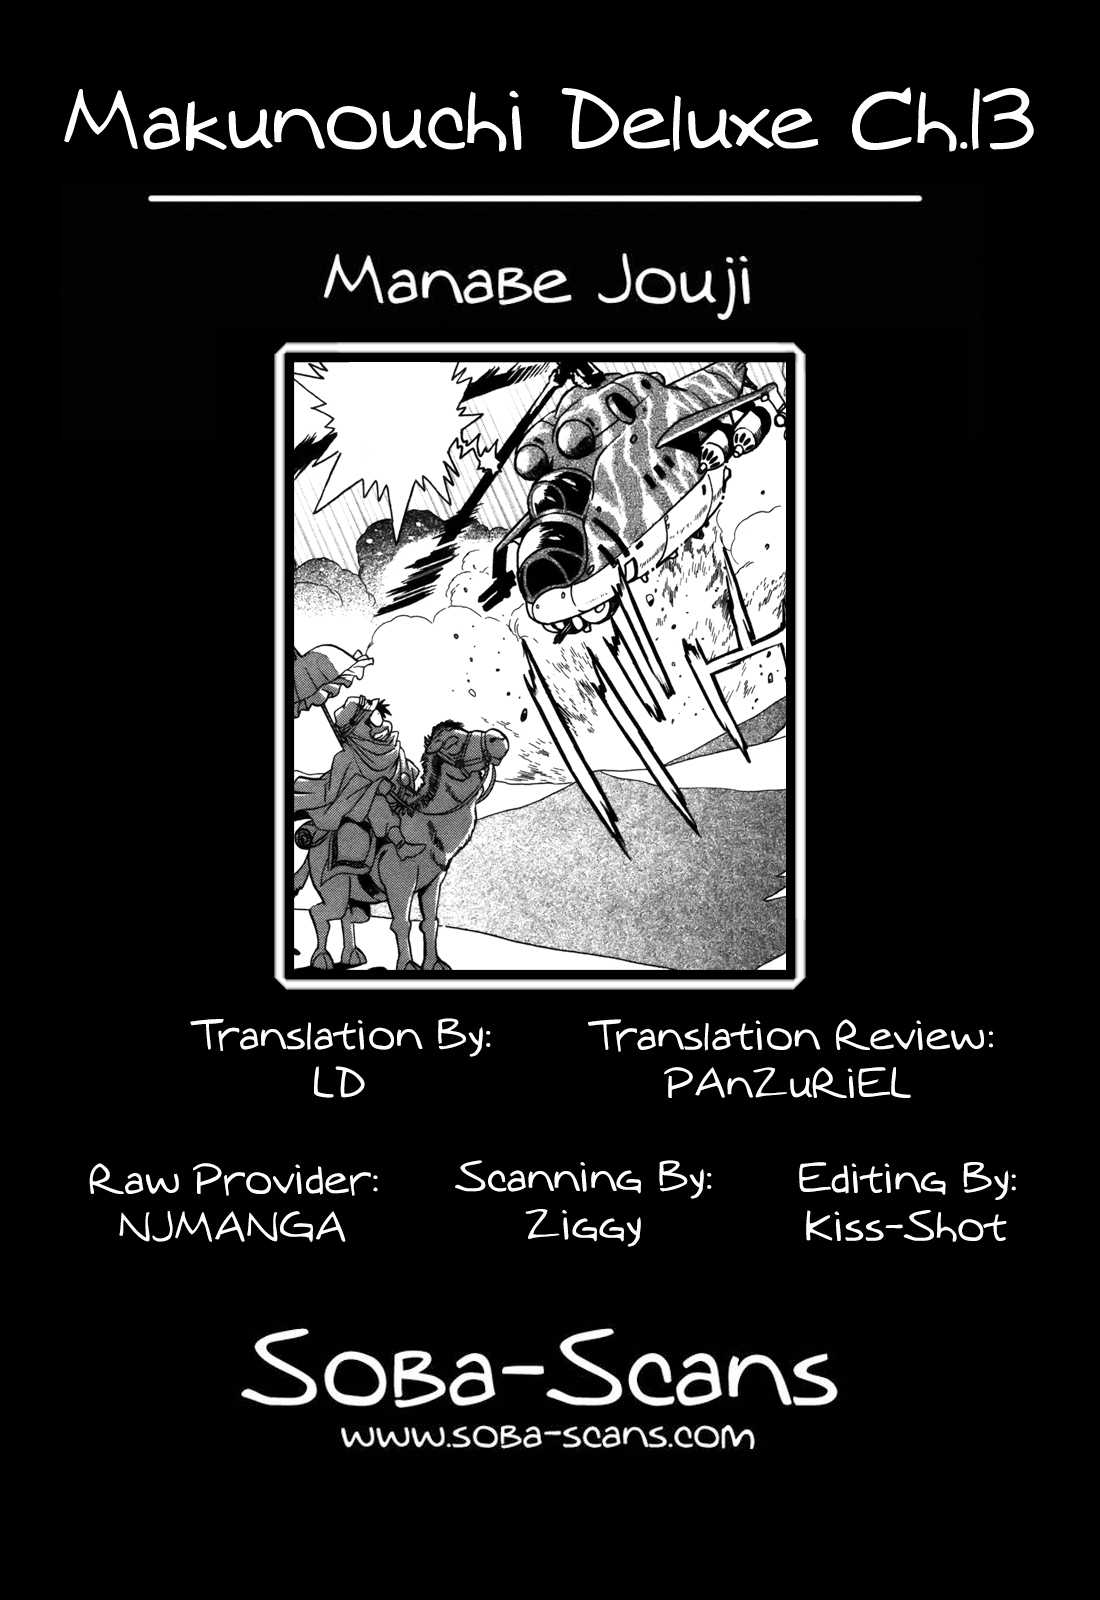 [Joji Manabe] Makunouchi Deluxe Chapter 10-17 [English] [Soba-Scans] 